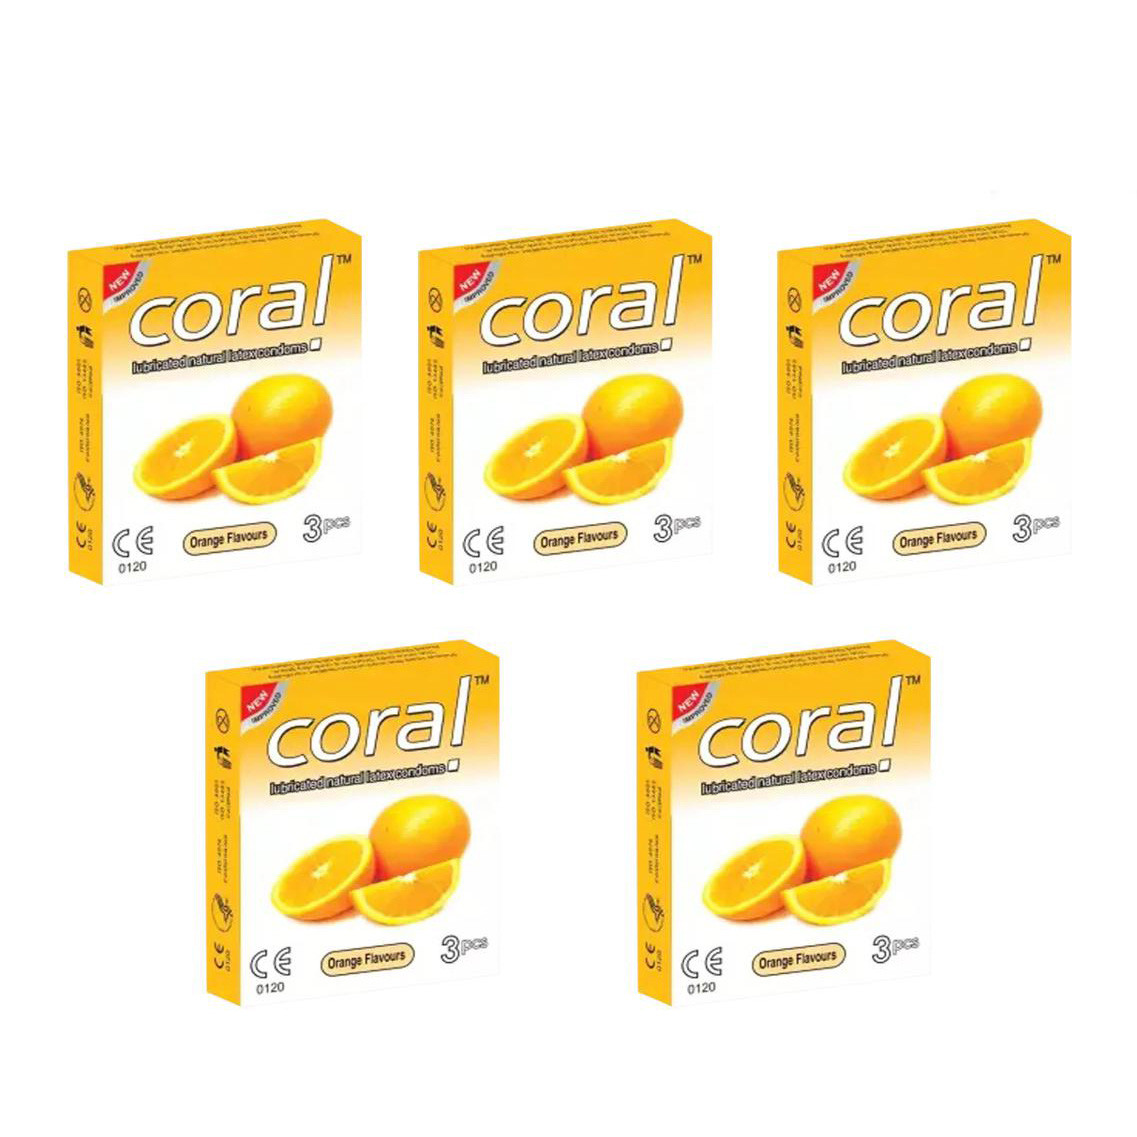 Coral Natural Orange Flavor Lubricated Condoms 3 pcs*5pack= 15pcs Condoms